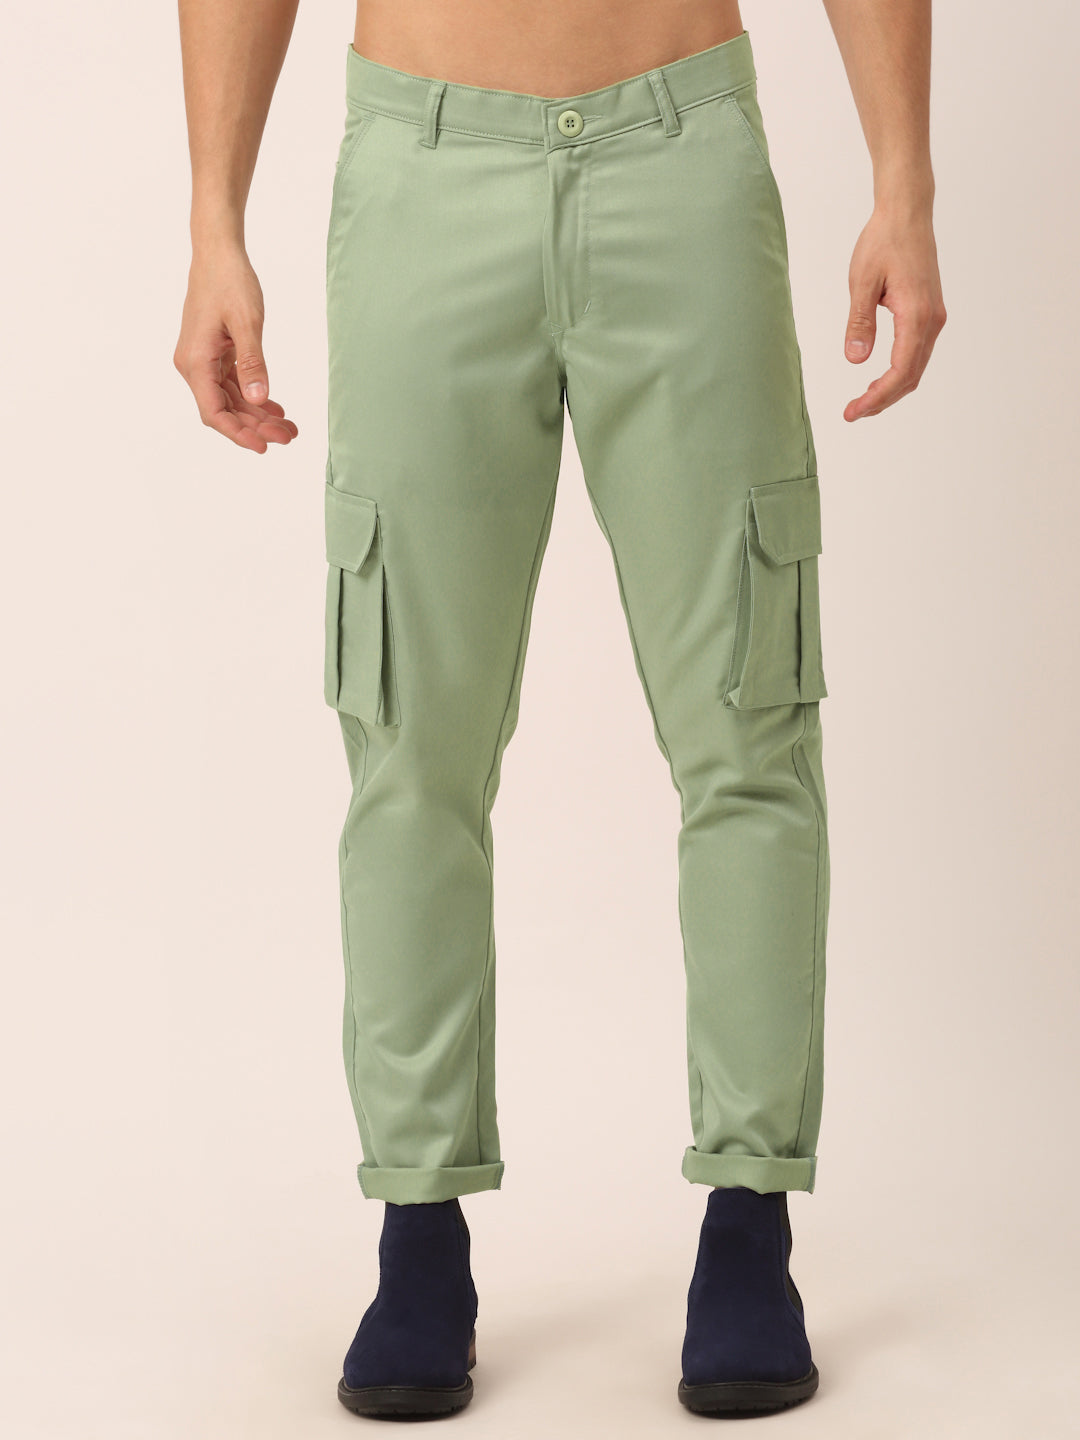 Pista Cotton Flex Solid Pants | VENUS-PISTA | Cilory.com